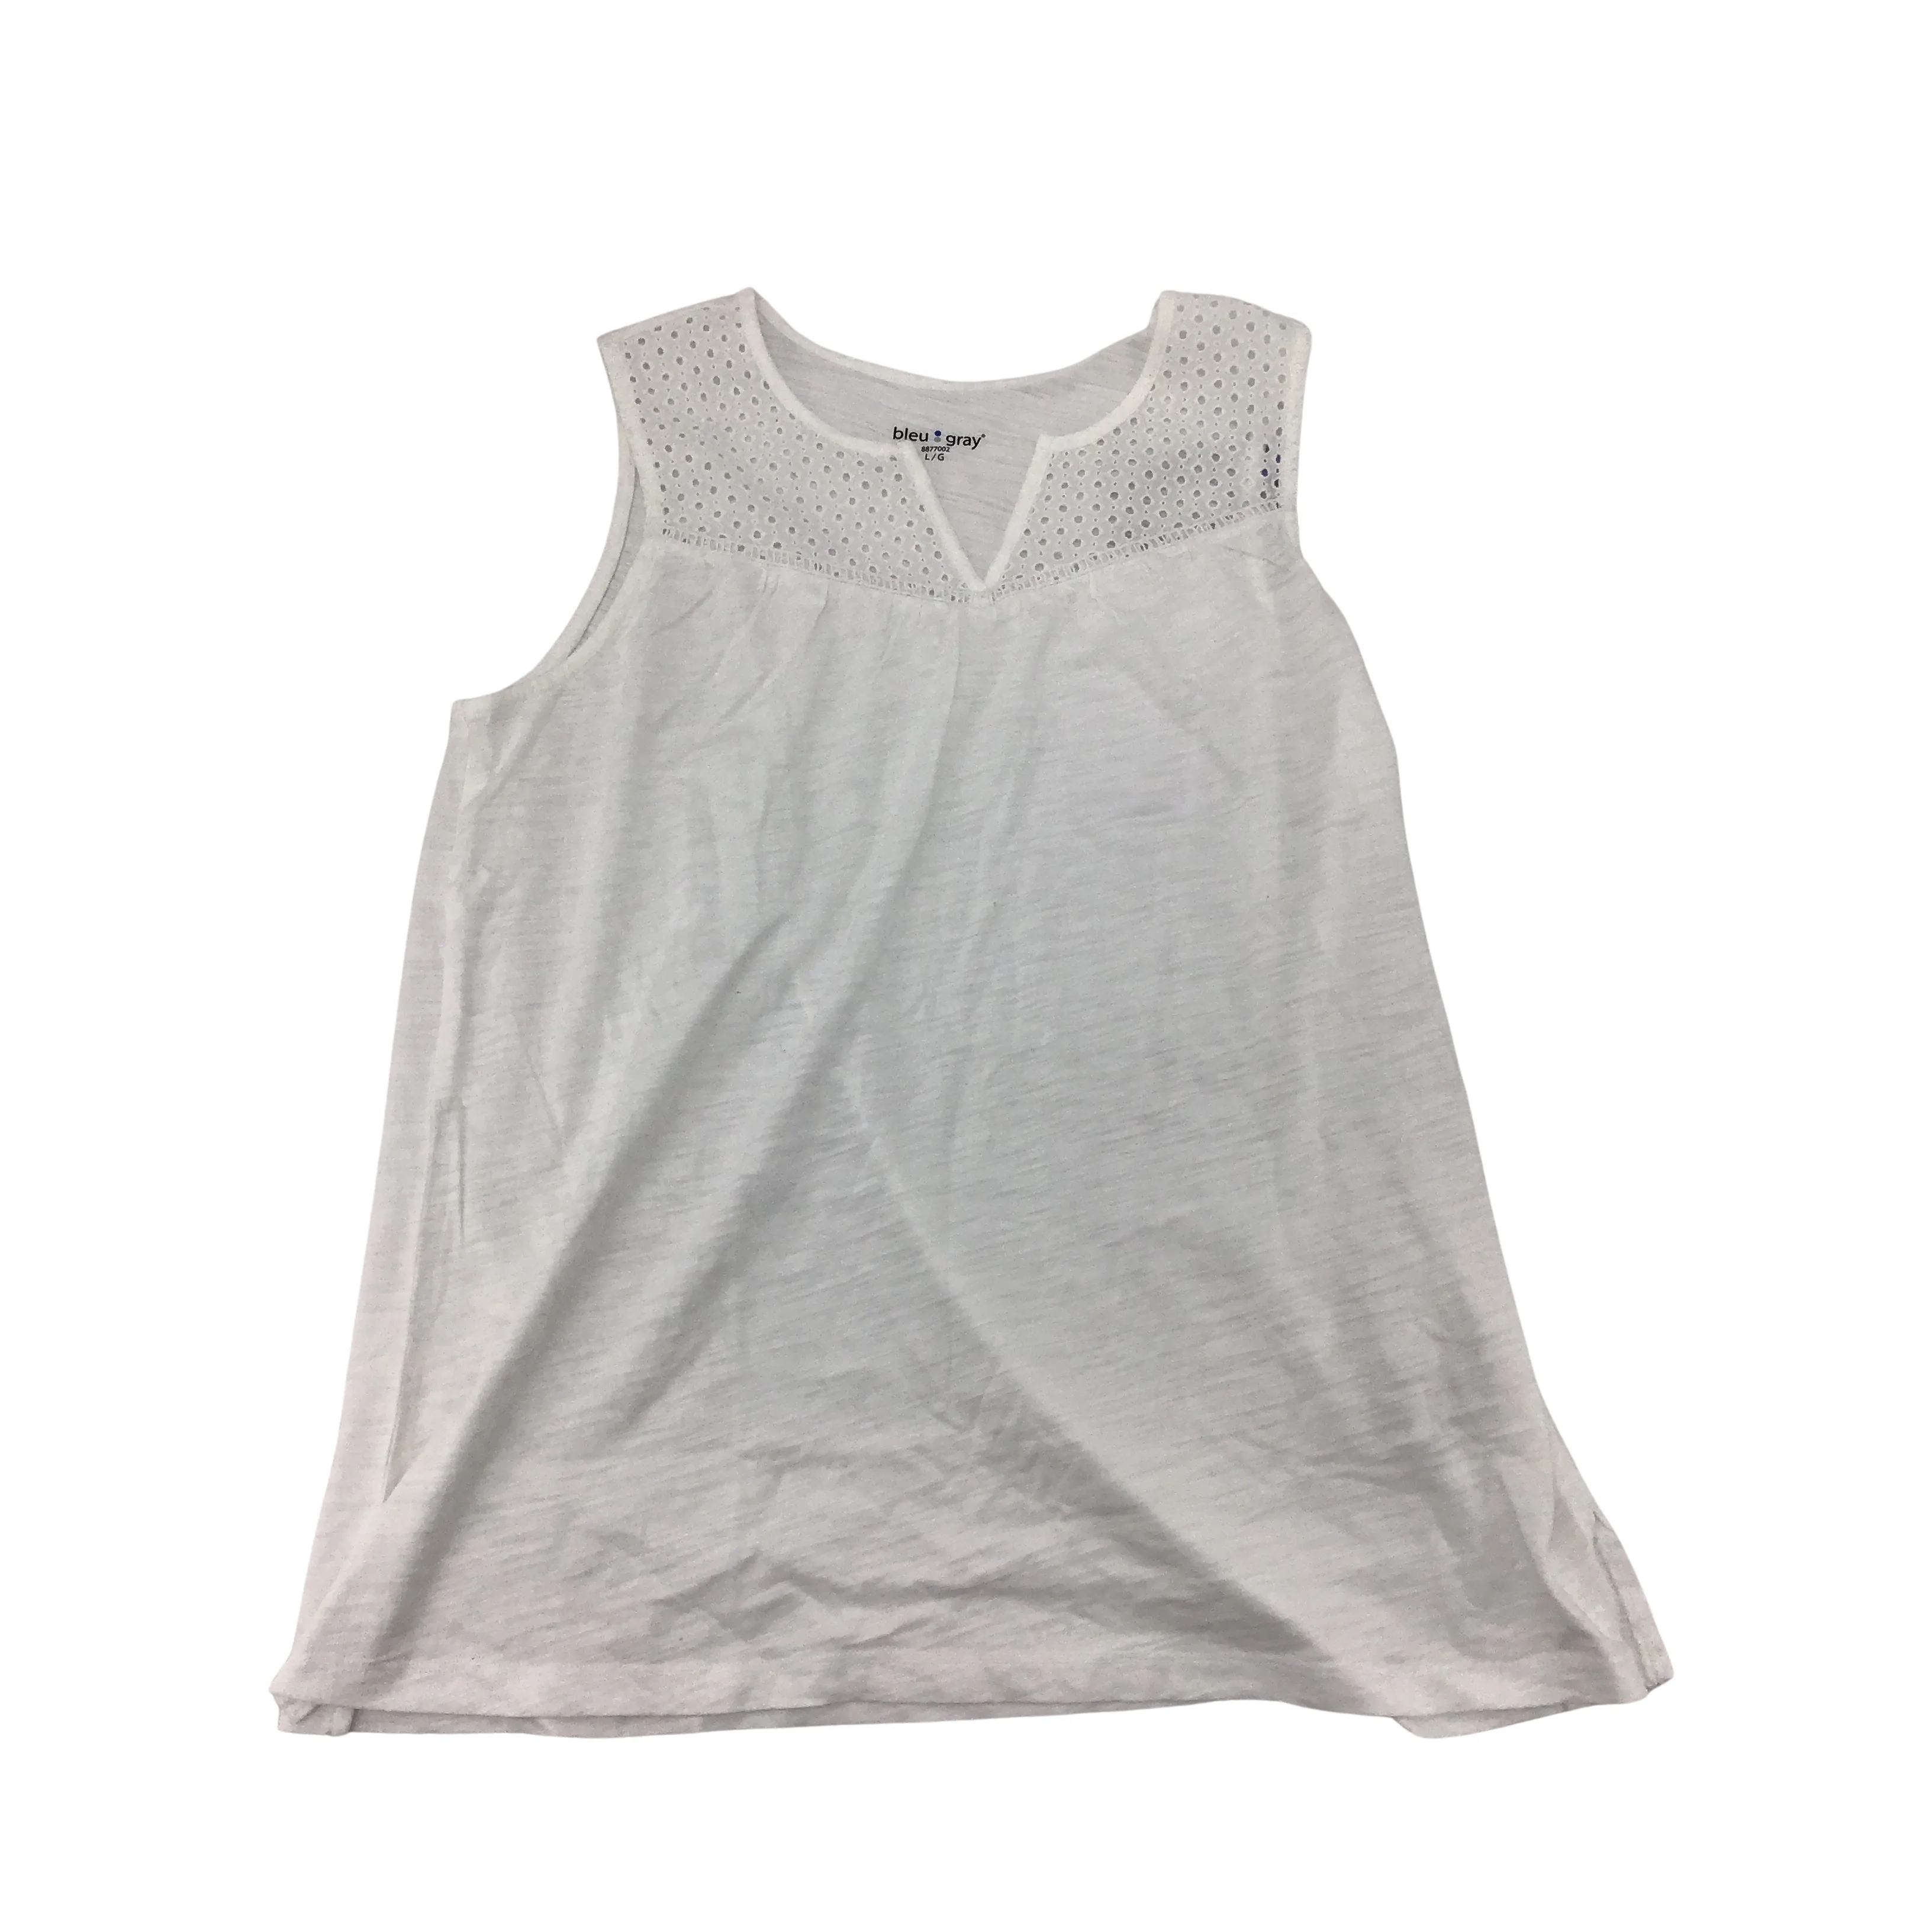 Bleu Gray Women's T-Shirt / White / Sleeveless / Large